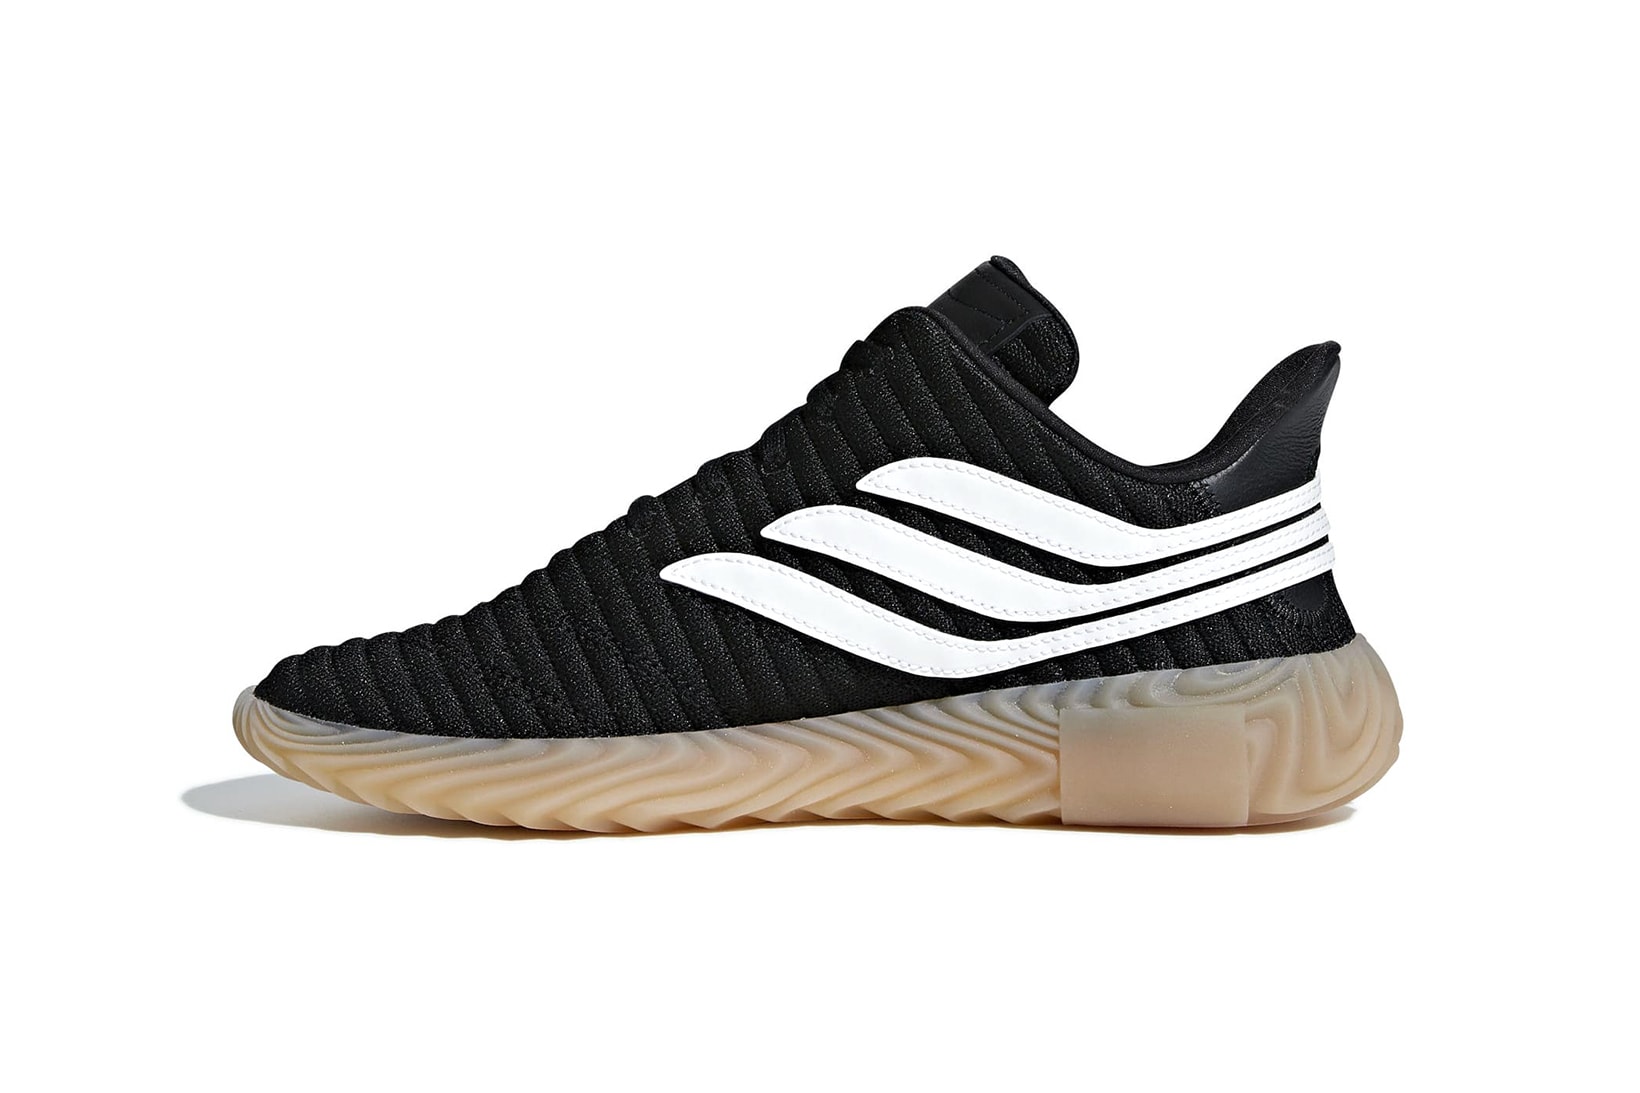 adidas Sobakov Black White Gum july 2018 release date info drop sneakers shoes footwear soccer football